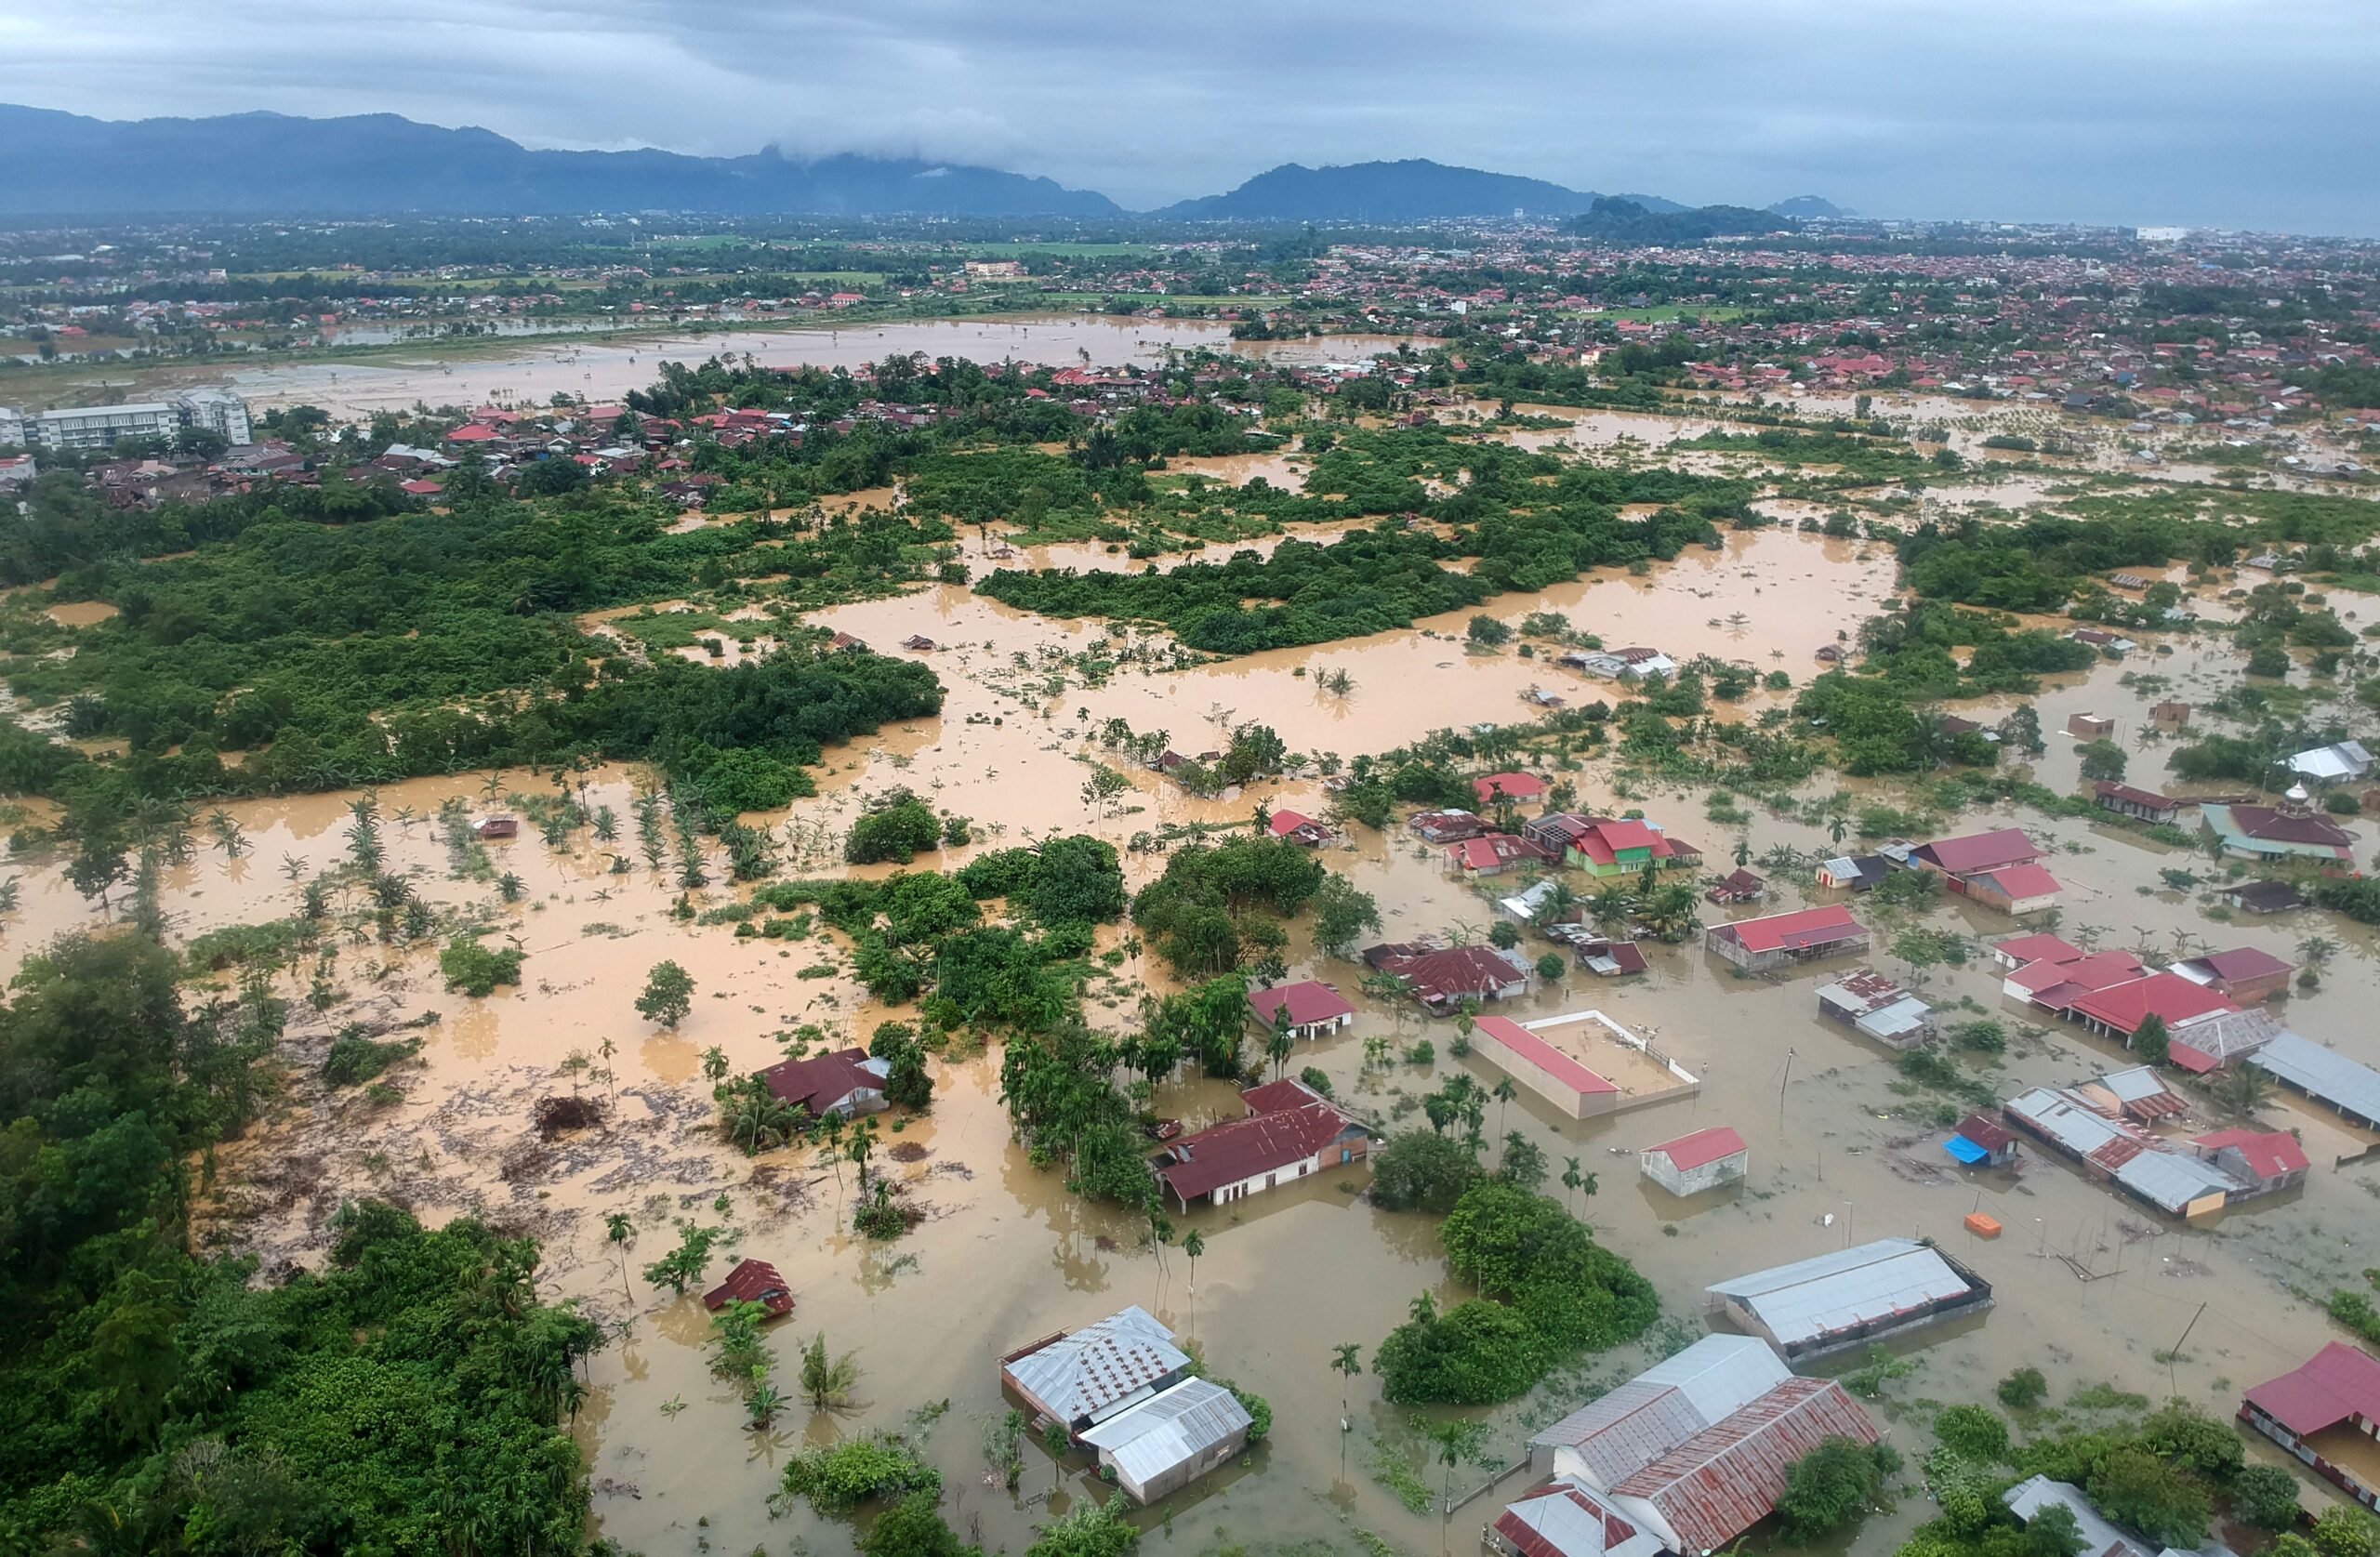 Indonesia floods, landslide kill 19, with 7 missing